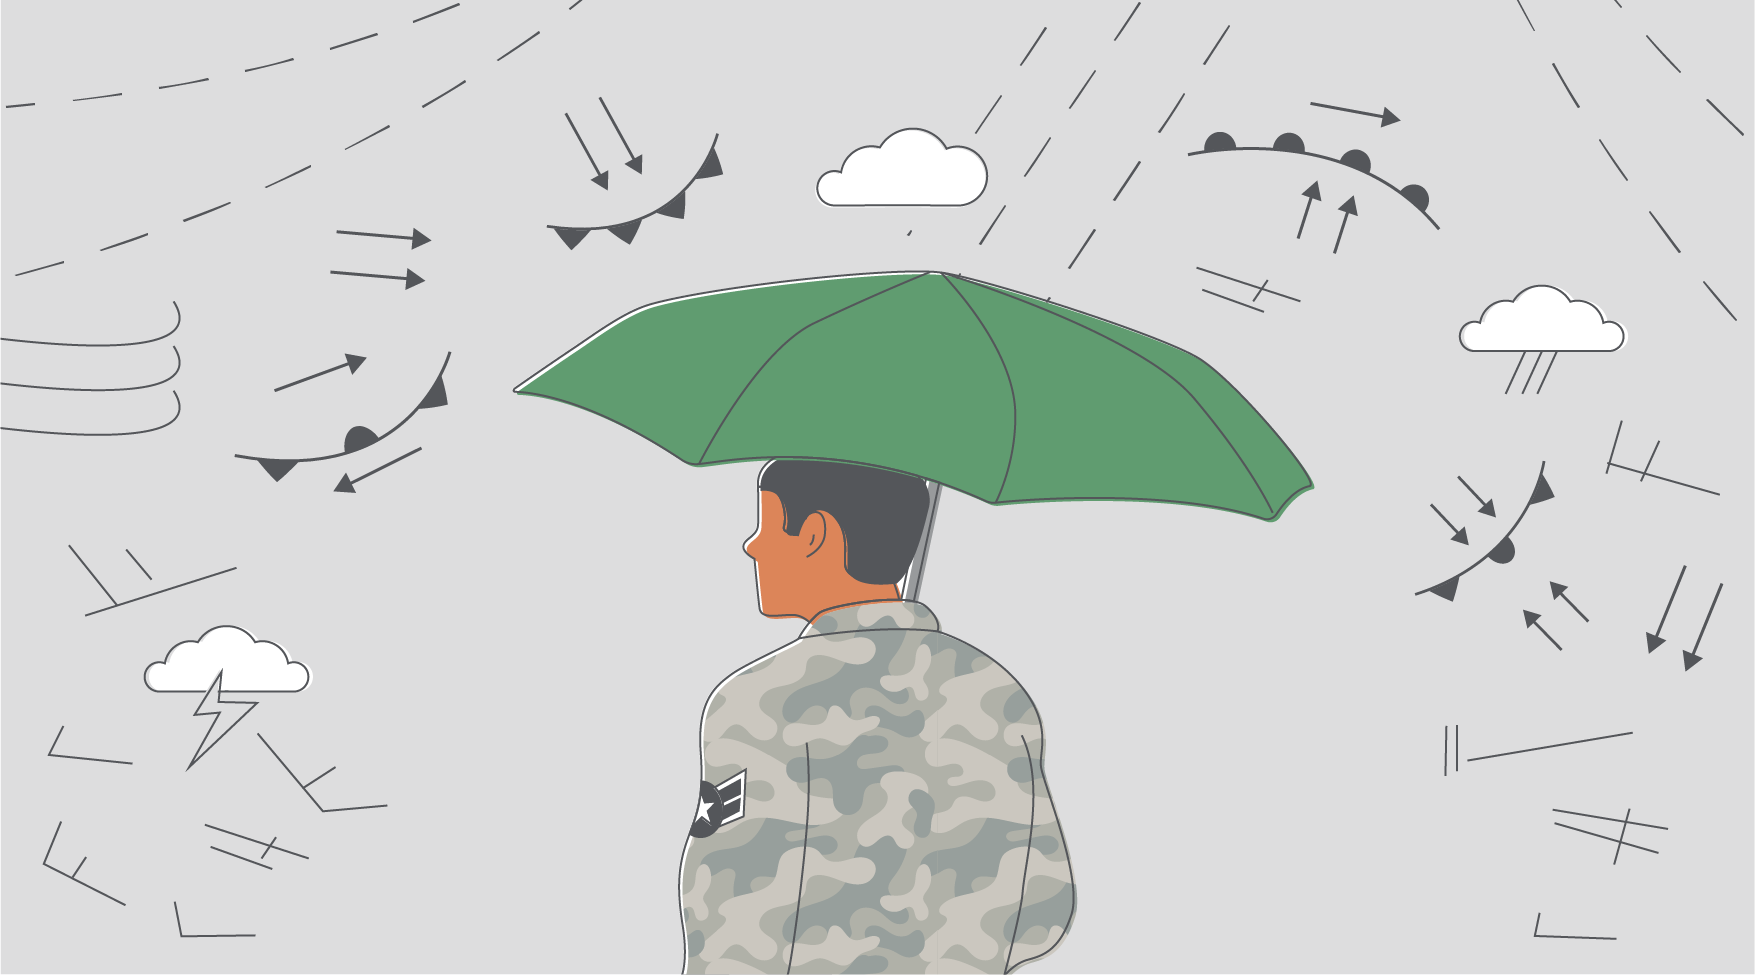 An airman stands under an umbrella while weather data rains down around them.